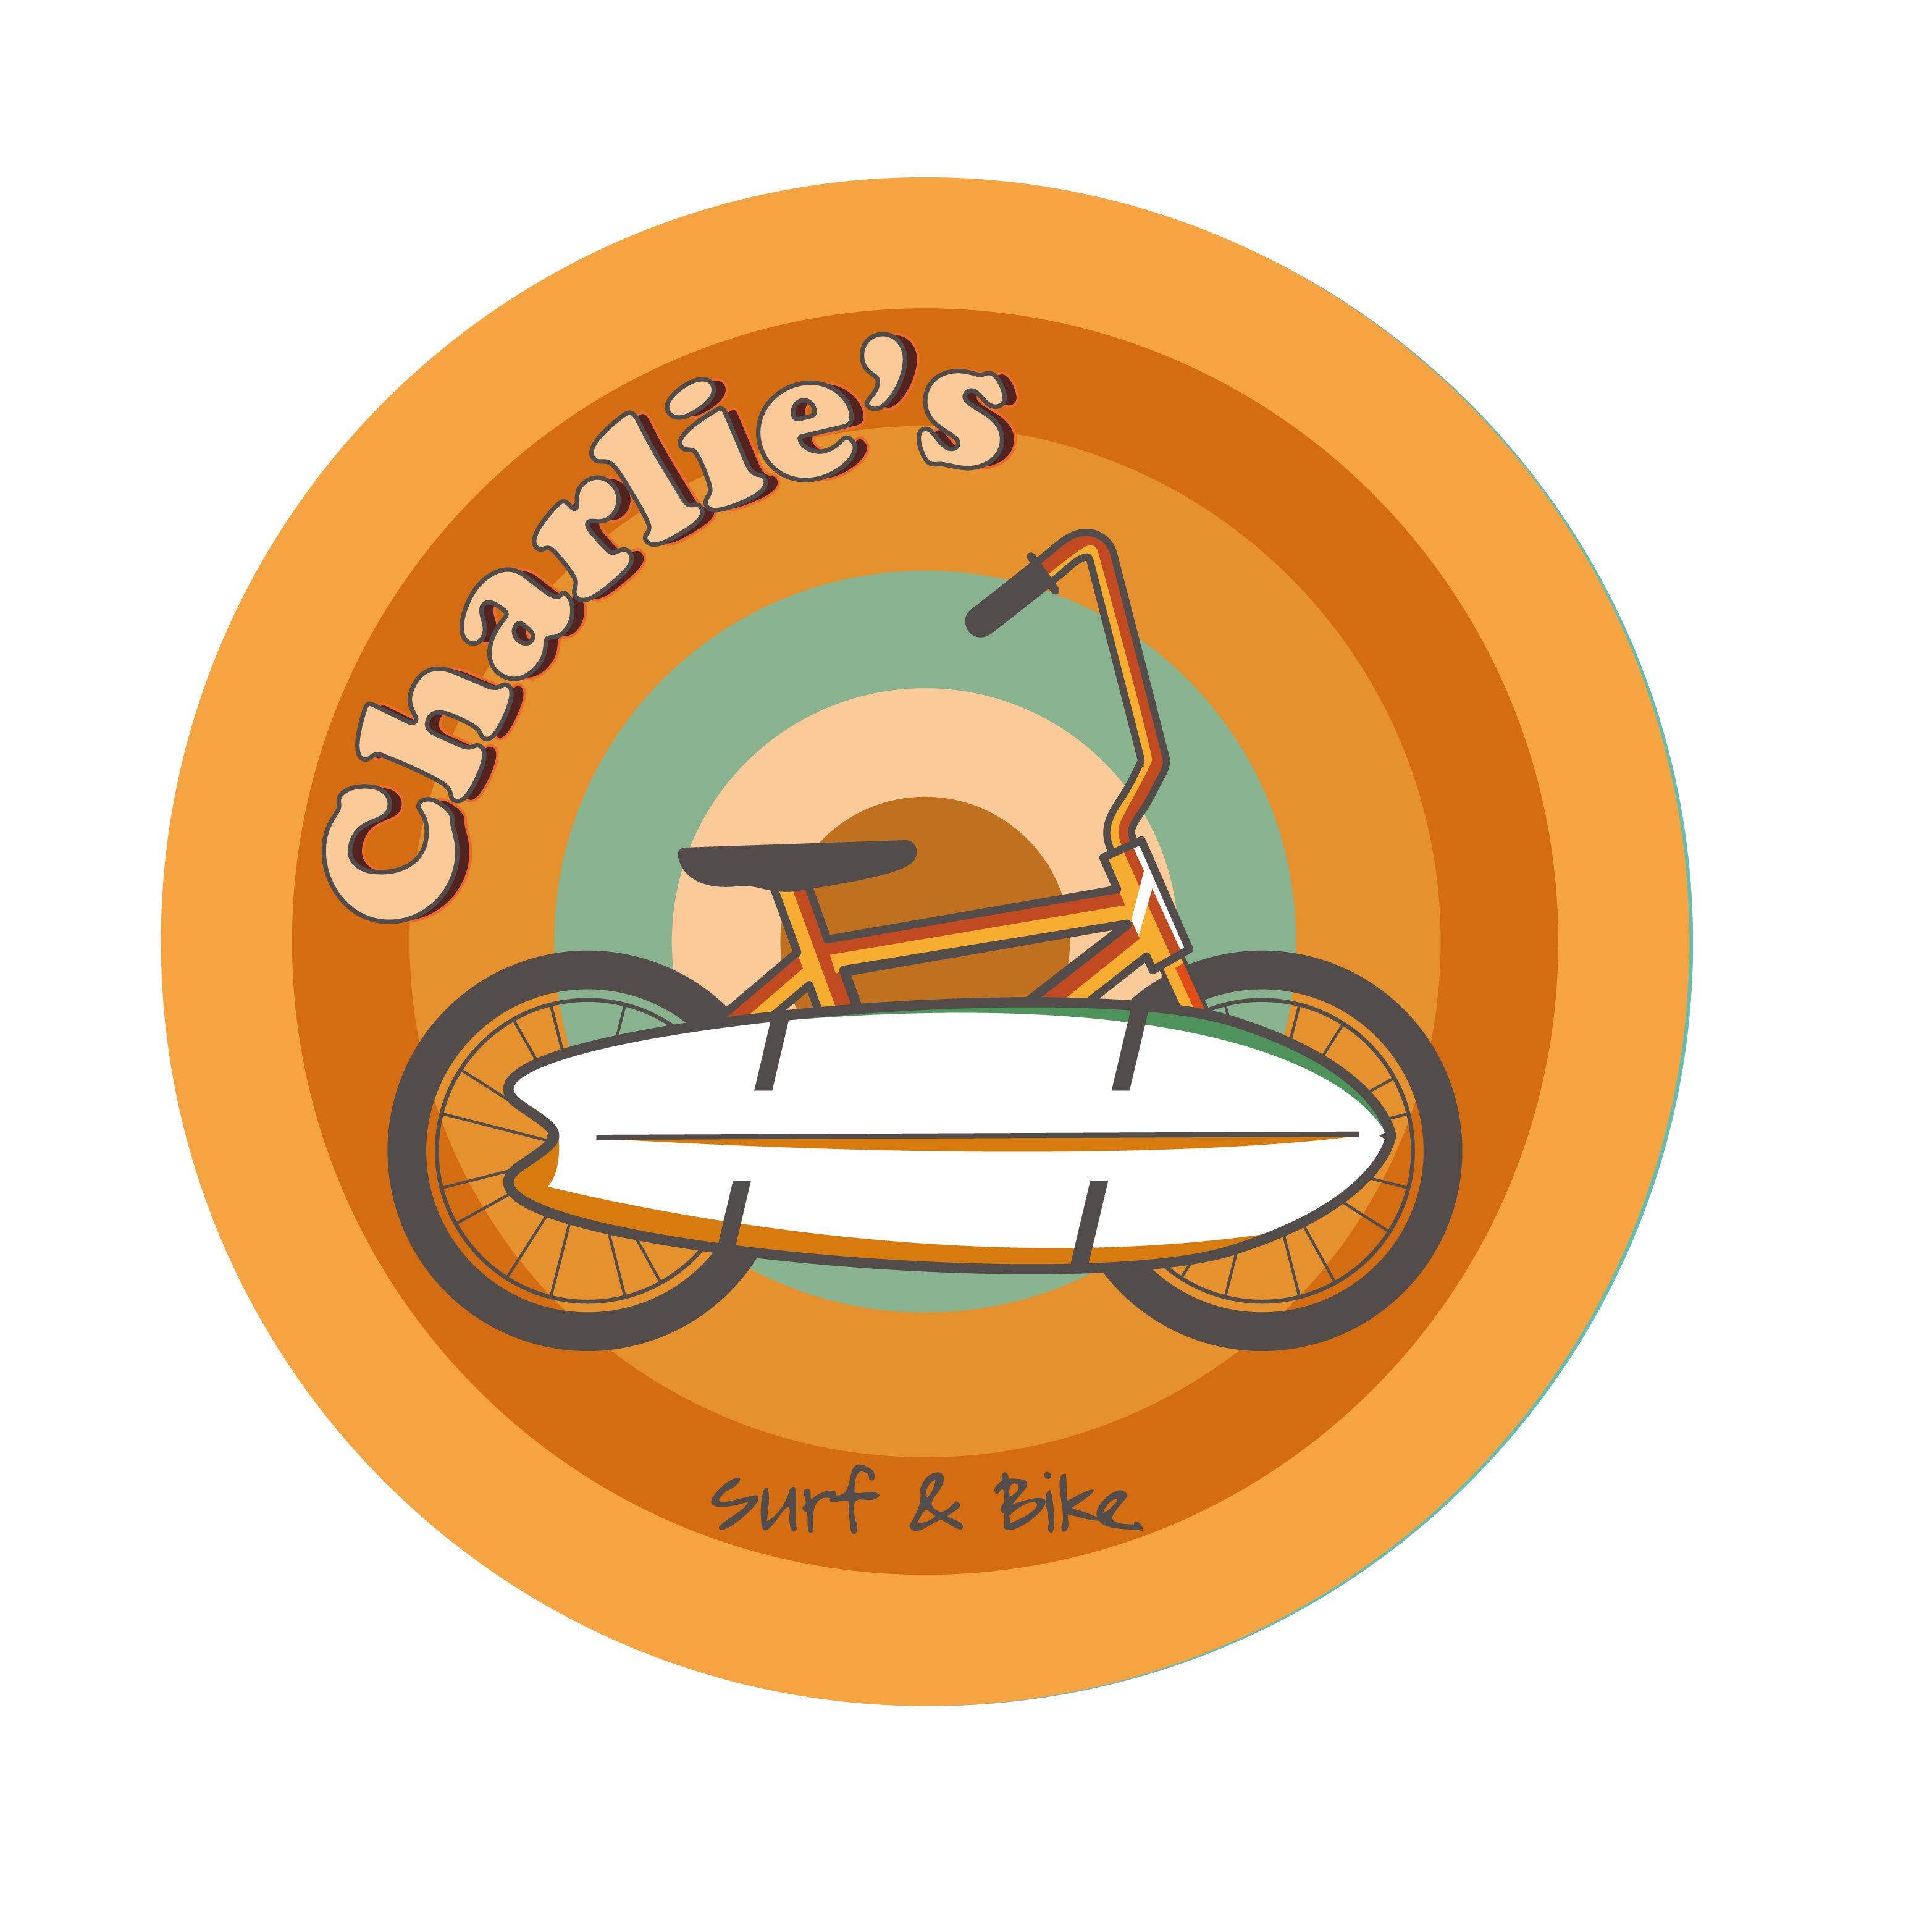 Charlie's Surf & Bike